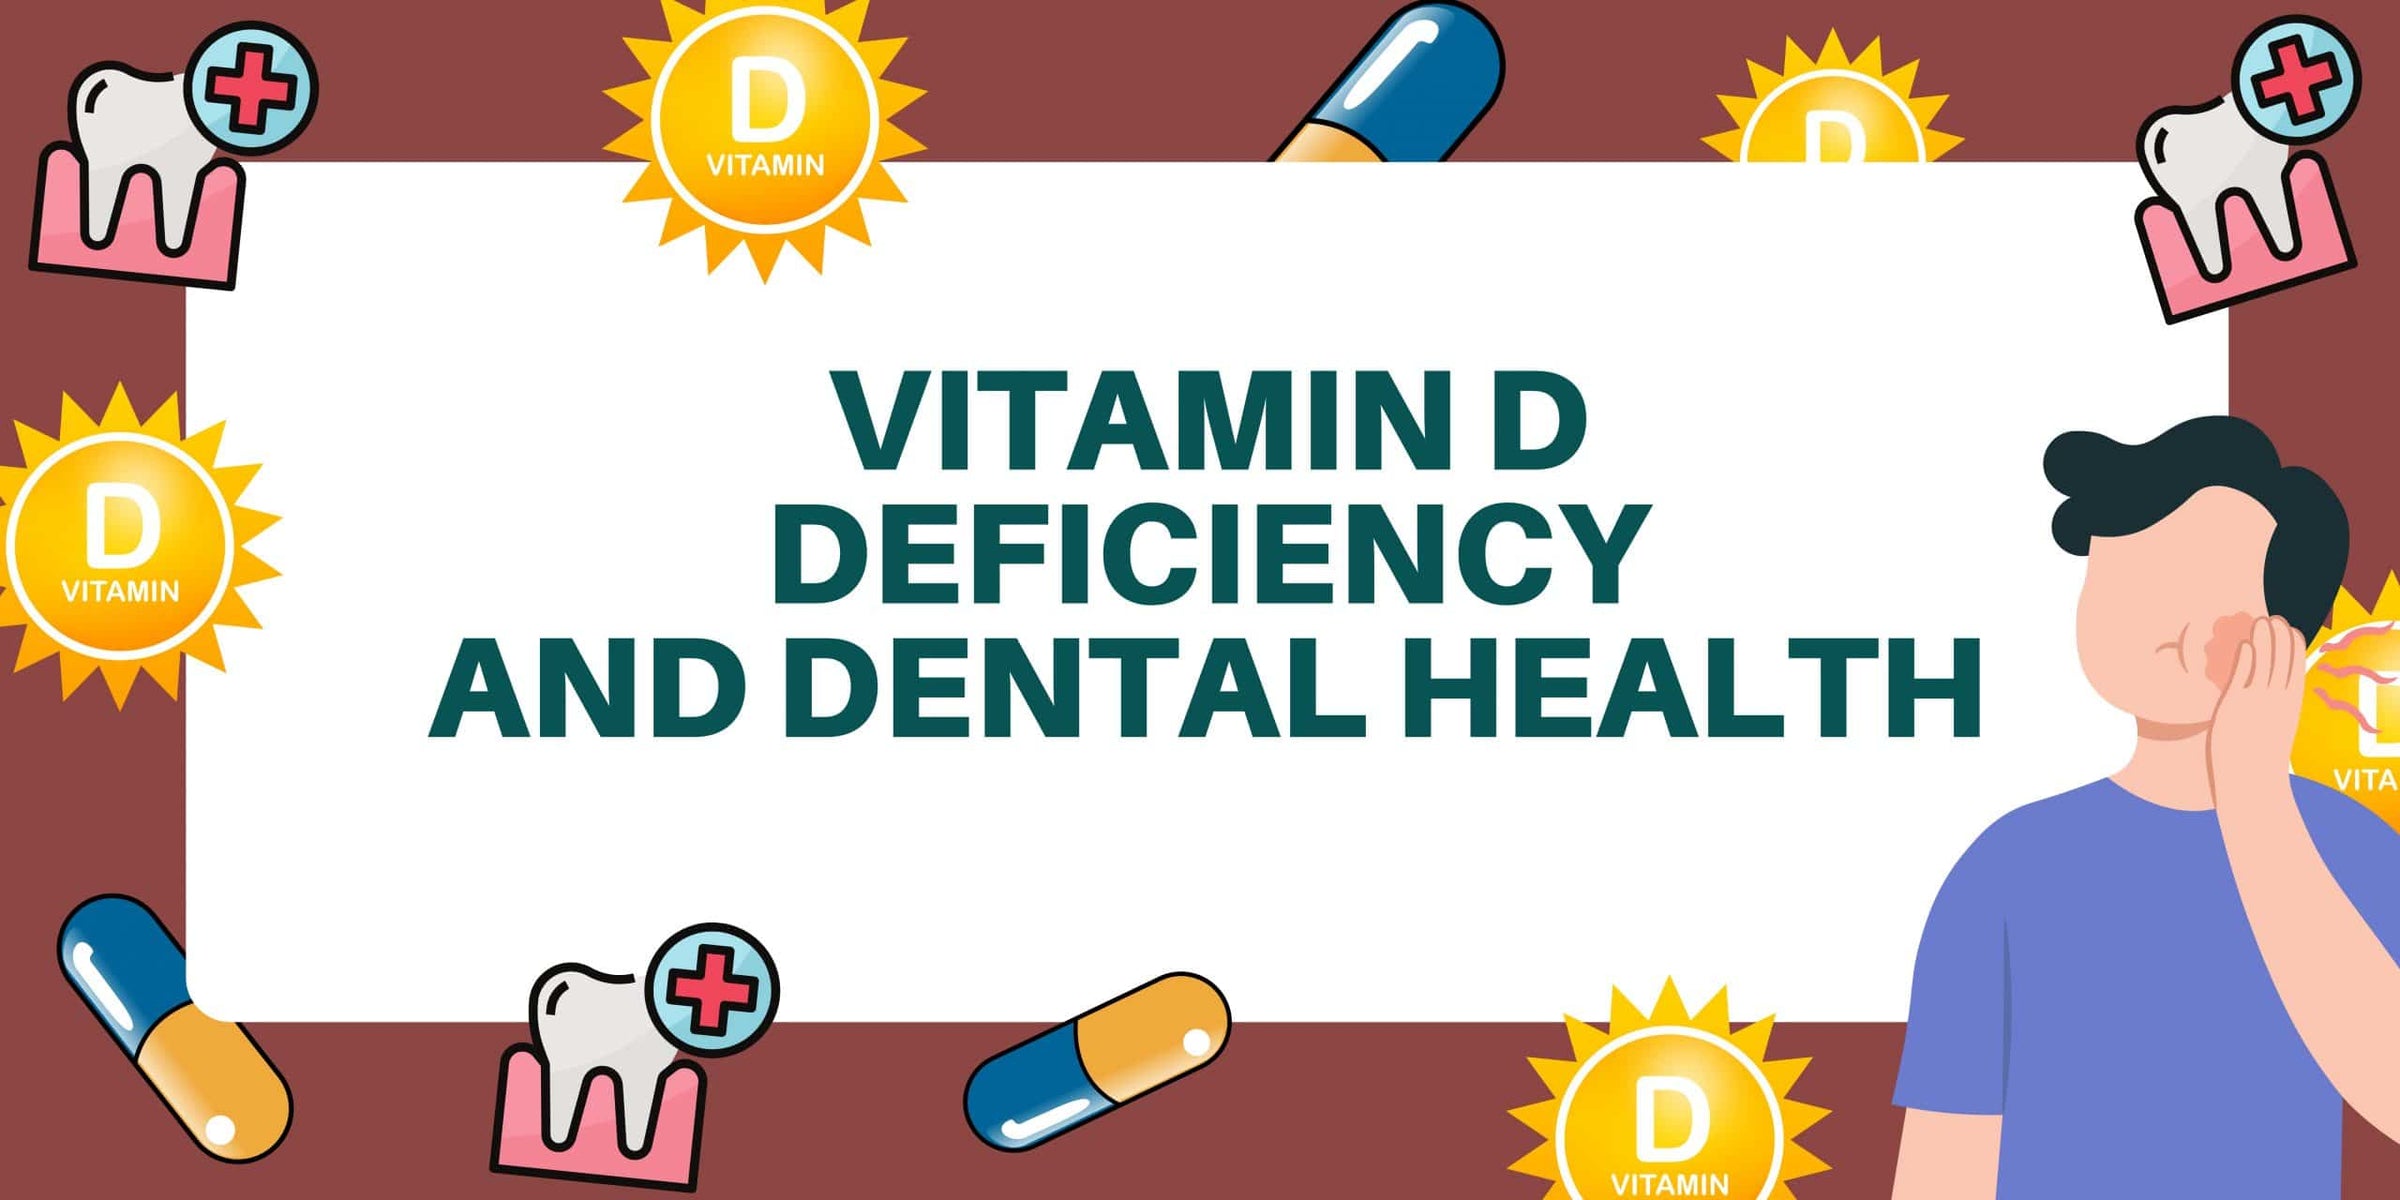 Vitamin D Deficiency and Dental Health Image